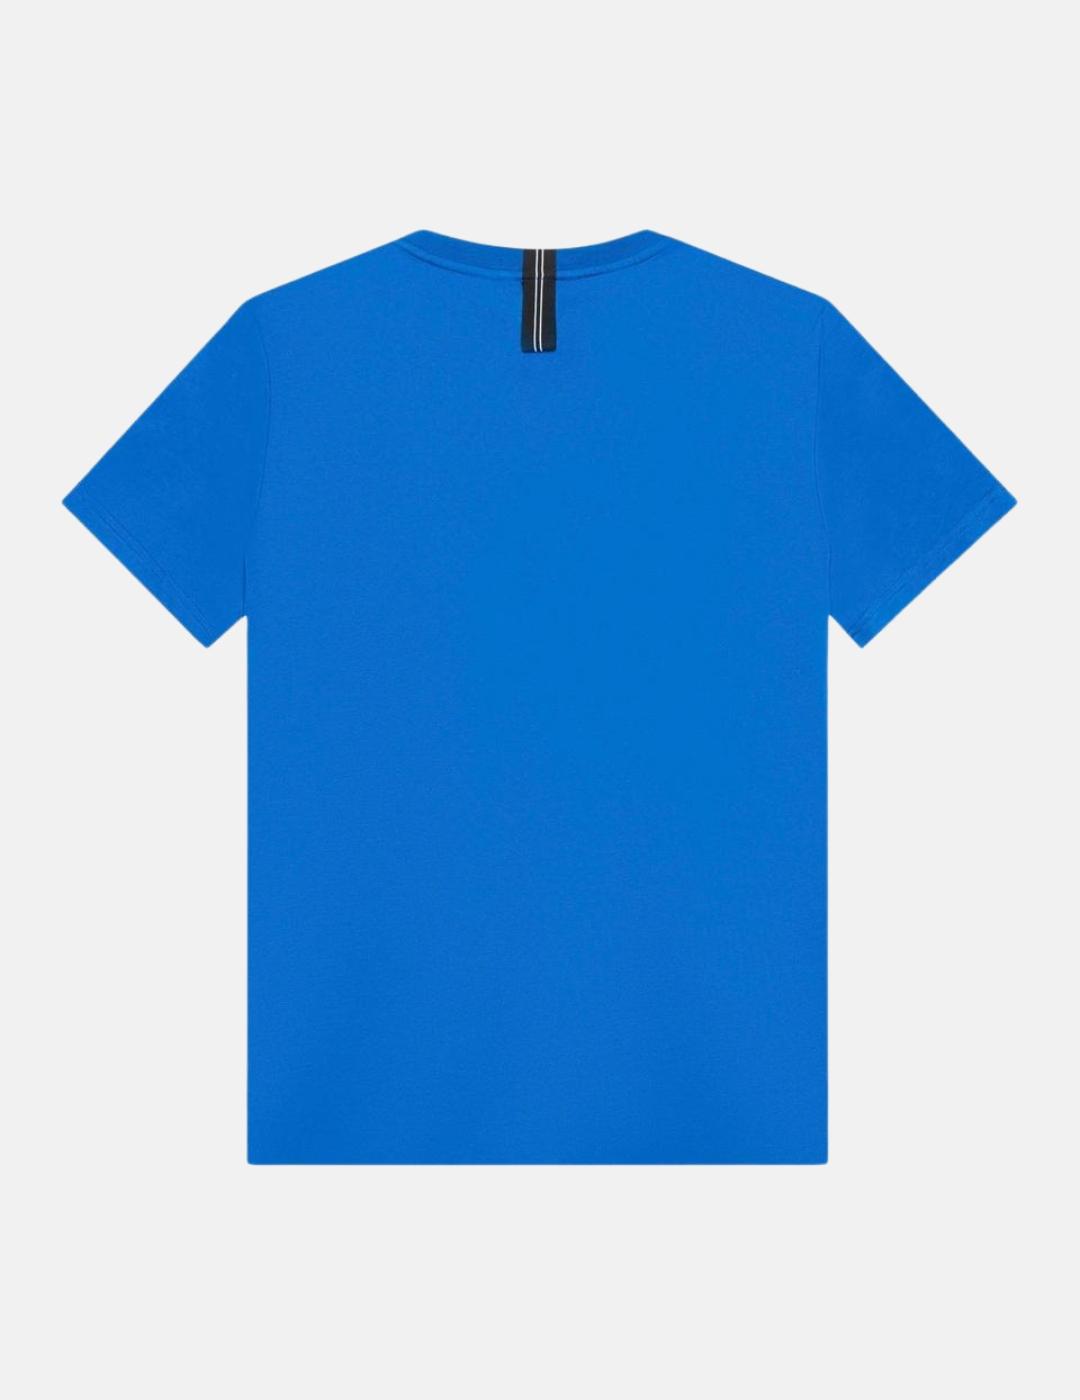 Camiseta Antony Morato azul para hombre